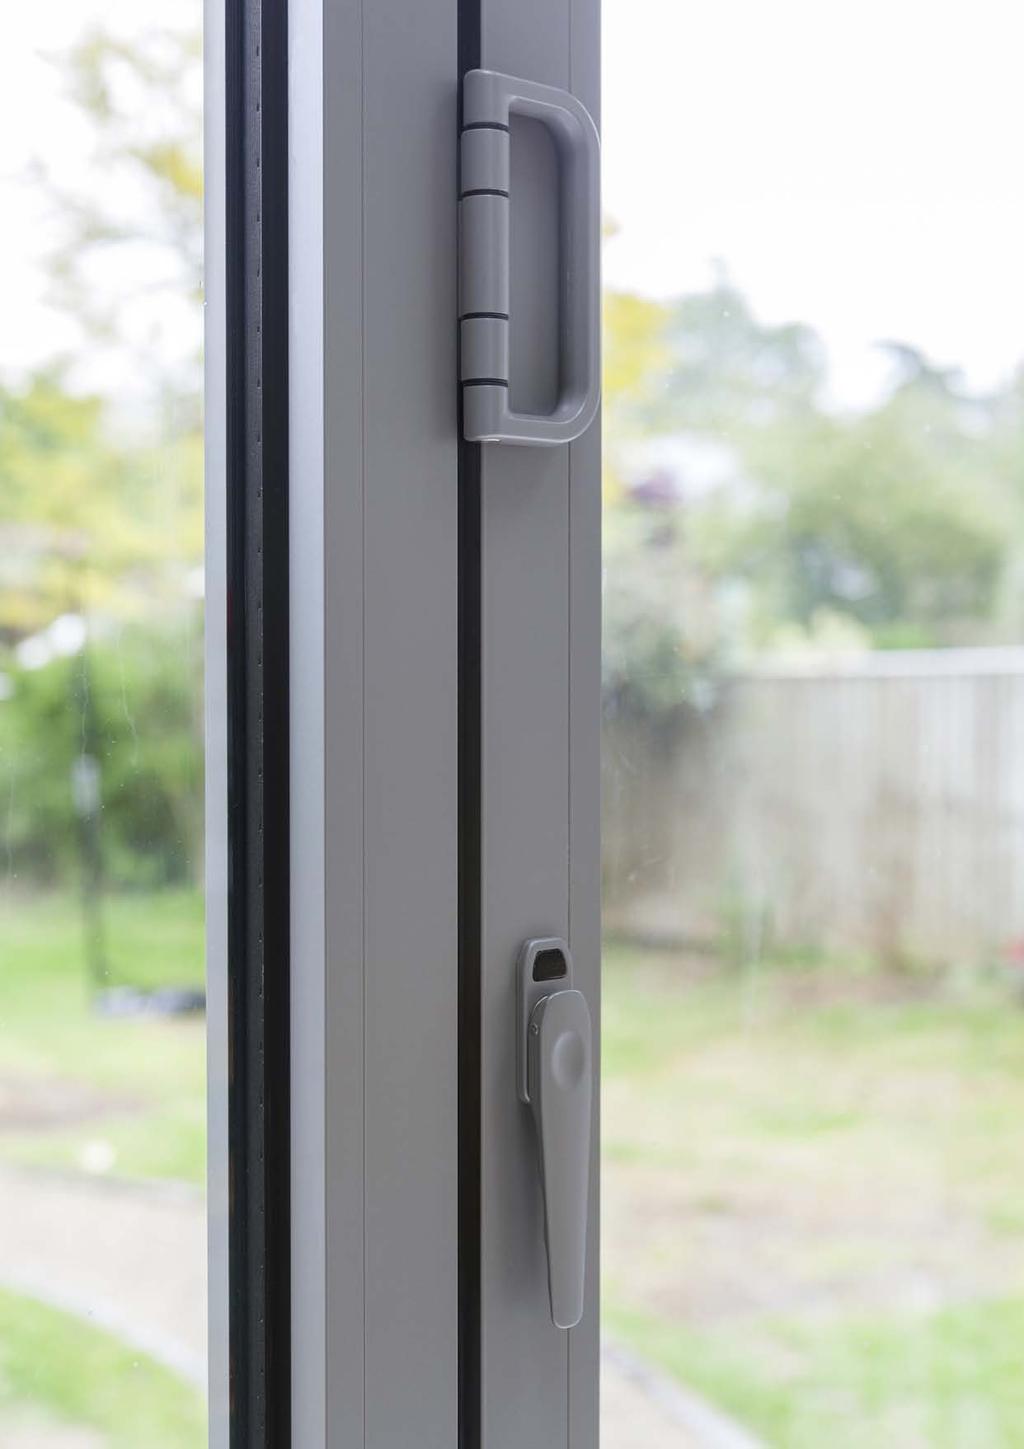 FLAIR ALUMINIUM BI-FOLDING DOORS Slim. Strong. Smooth The high strength of aluminium ensures that the Flair Aluminium Bi-folding Doors are one of the strongest available.